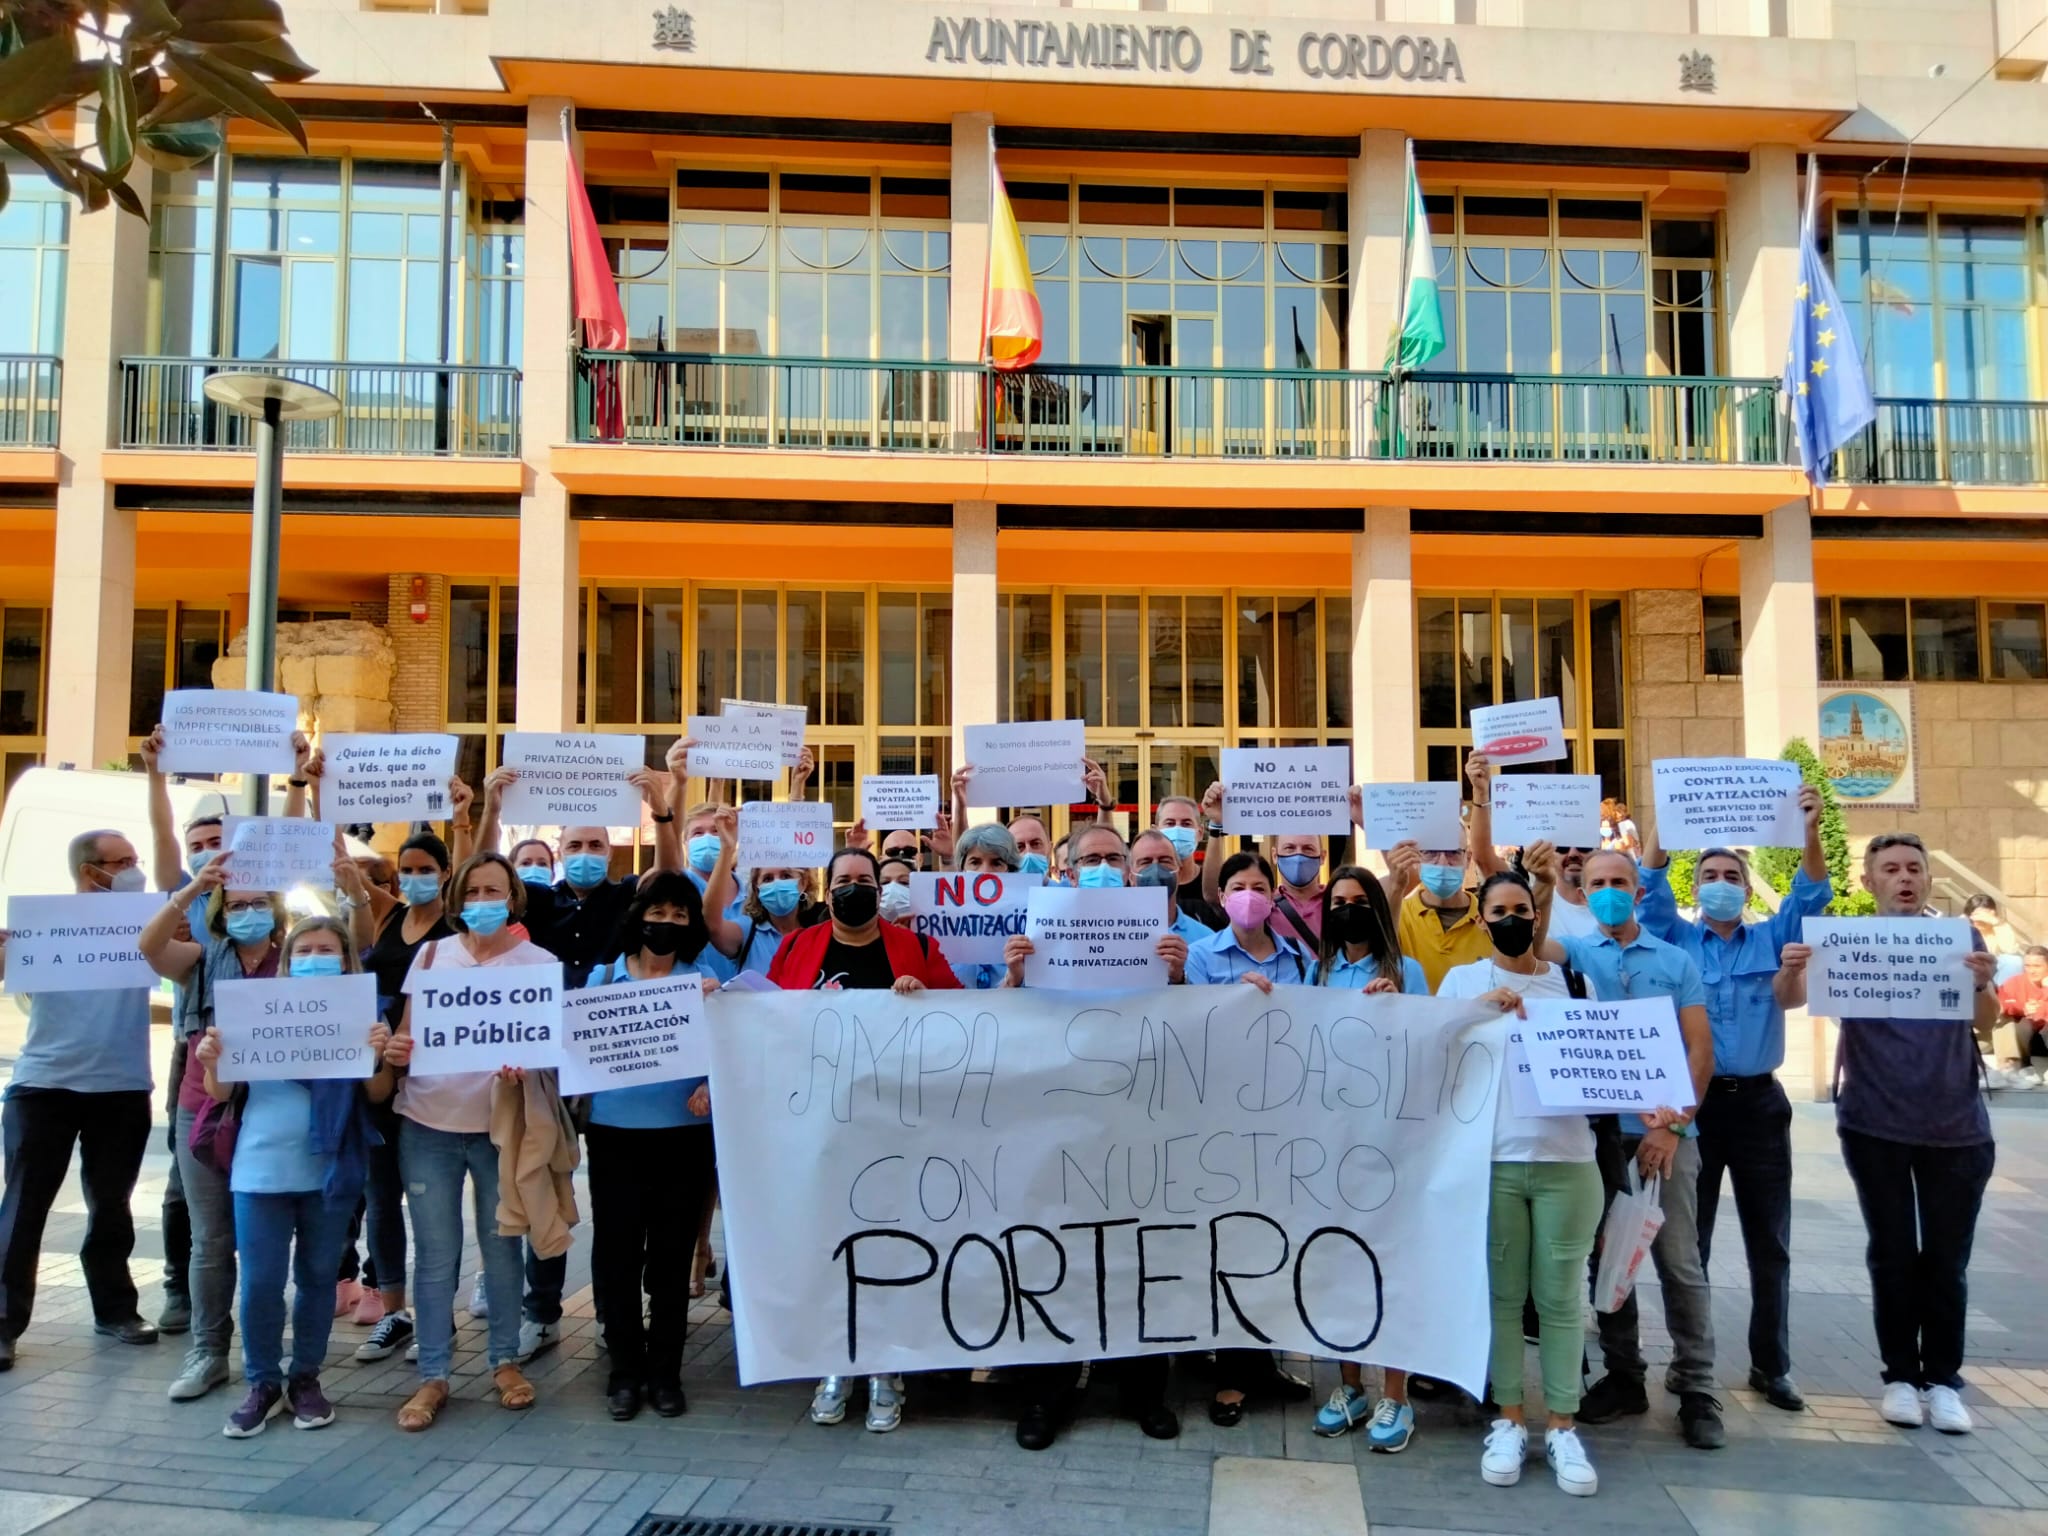 Centro público educativo apoyando a los porteros de Córdoba